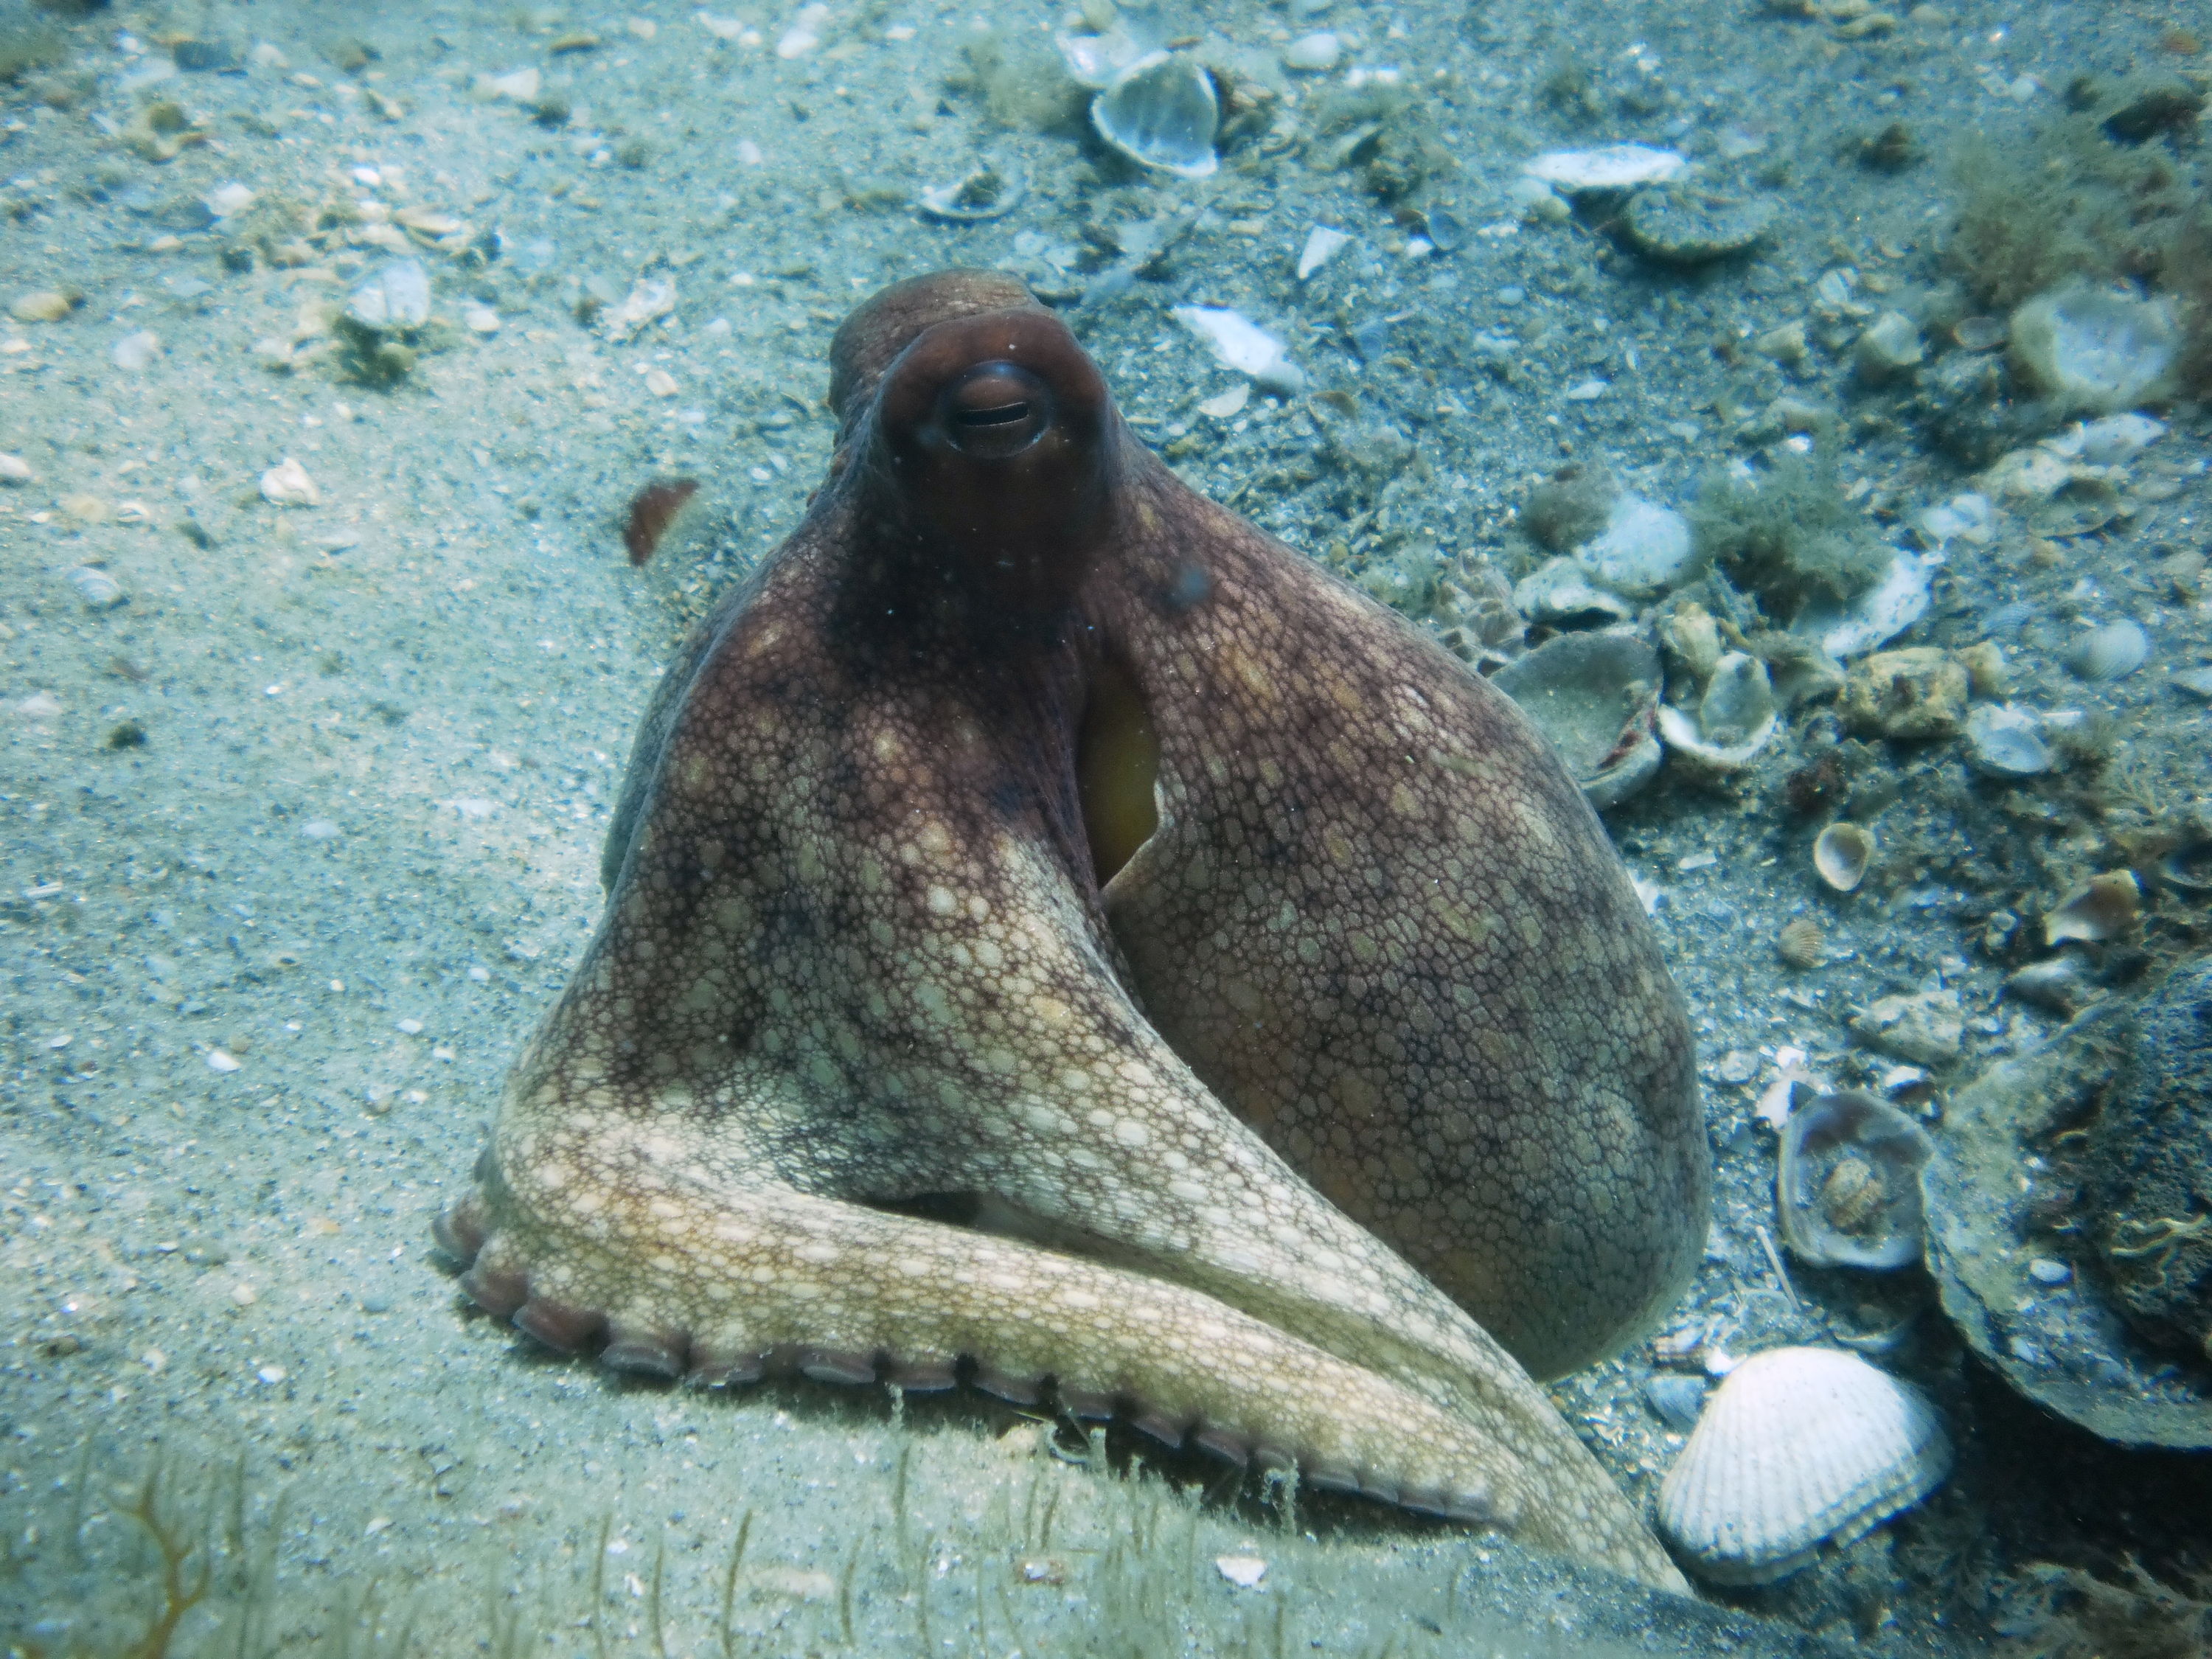 Just a plain octopus